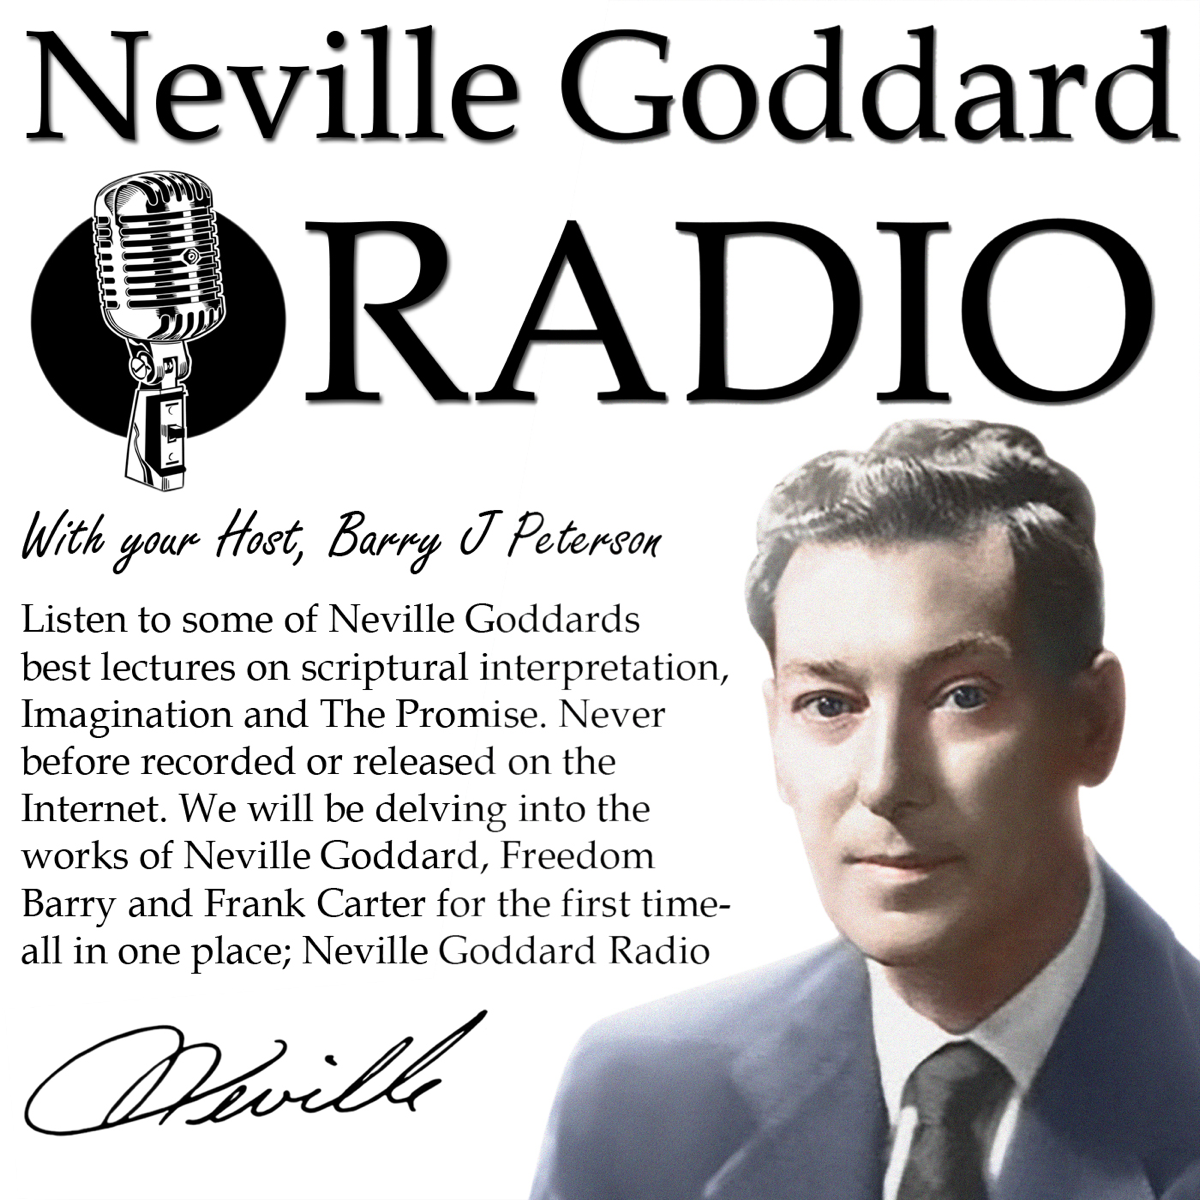 Neville Goddard Radio's podcast - Podcast - iTunes台灣